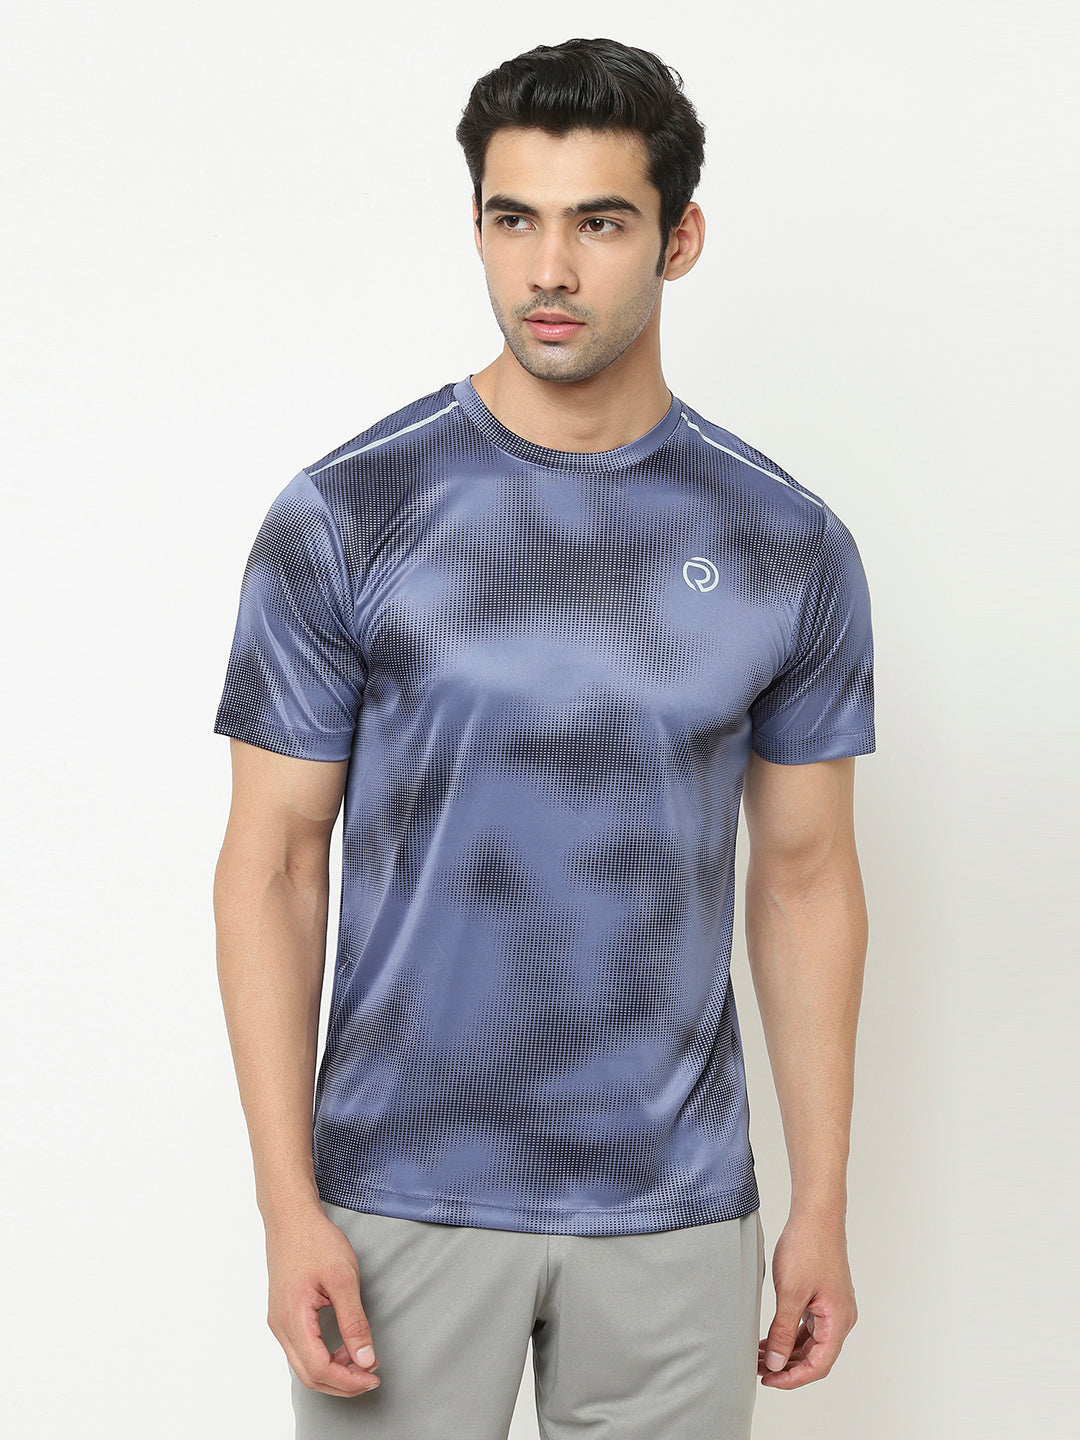 Men's Dryfit T-shirt with Stylish Print